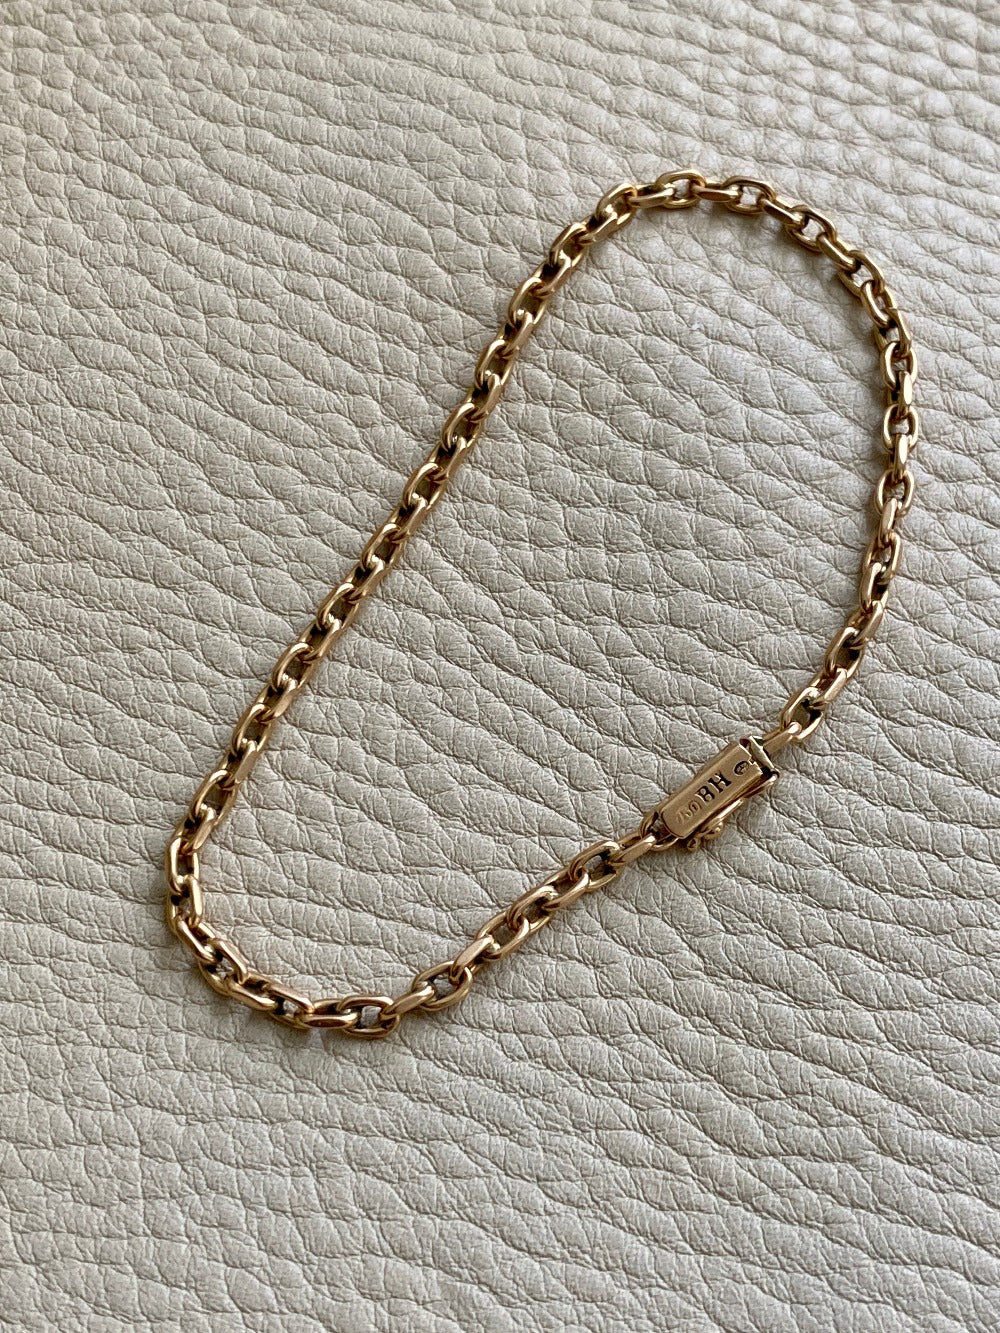 18k gold anchor link bracelet Danish antique early 1900s era